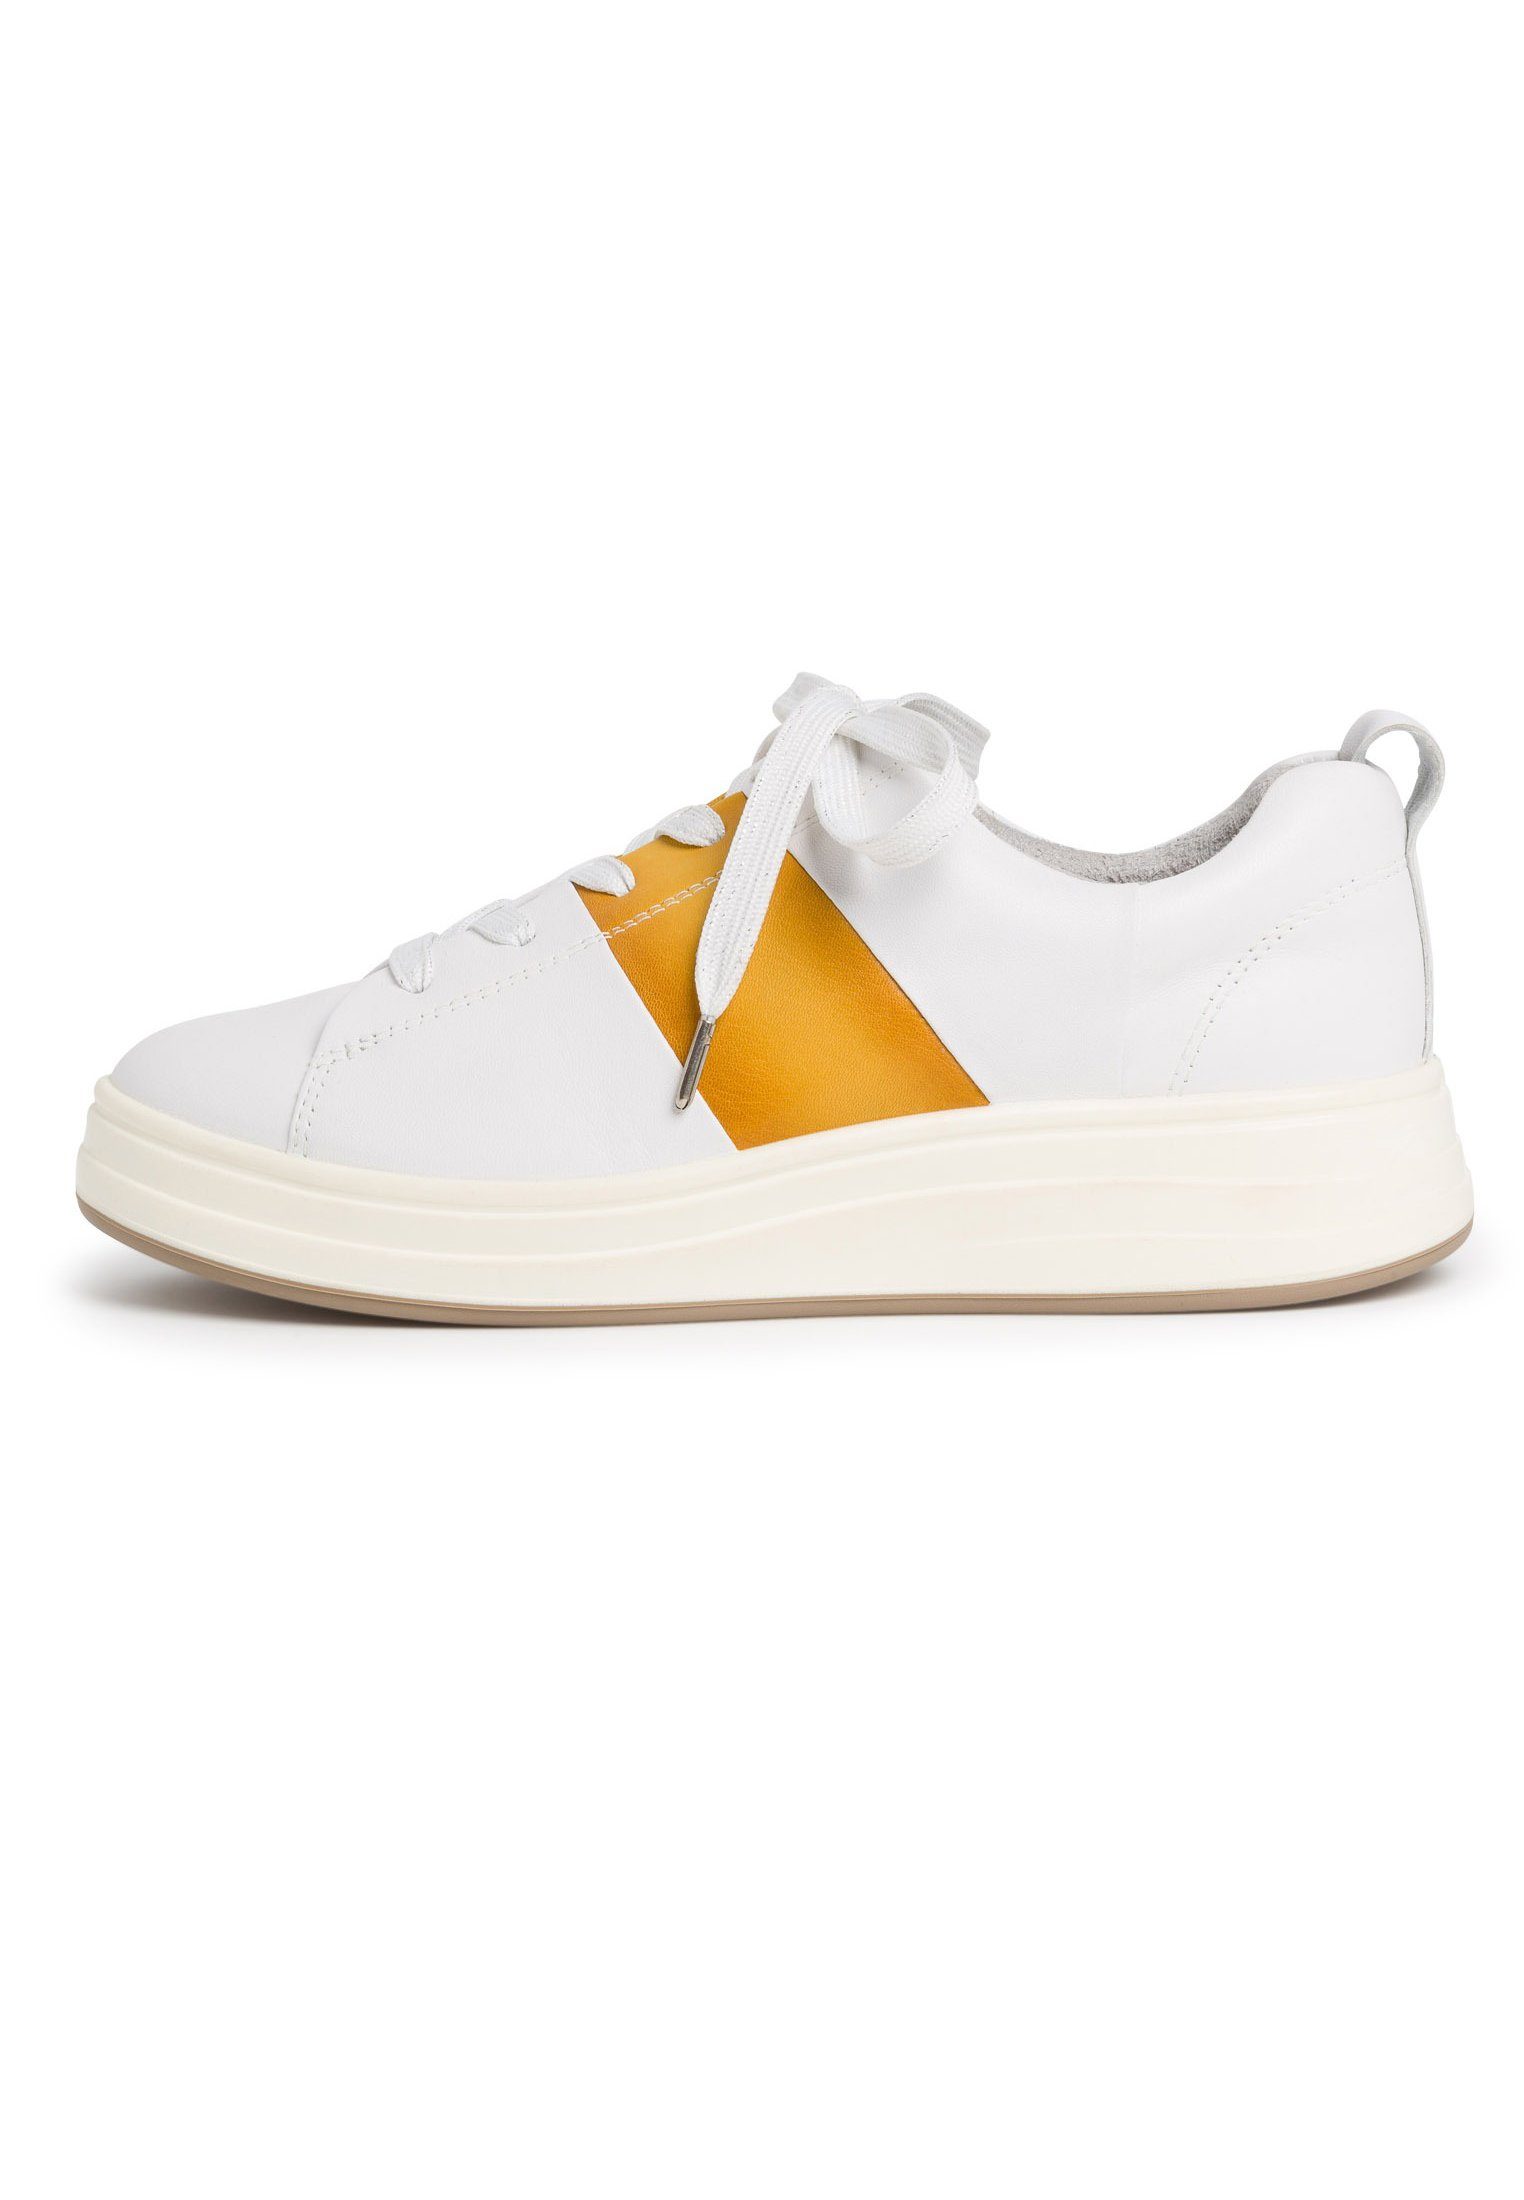 Tamaris 1-23713-24 124 White/Saffron Sneaker